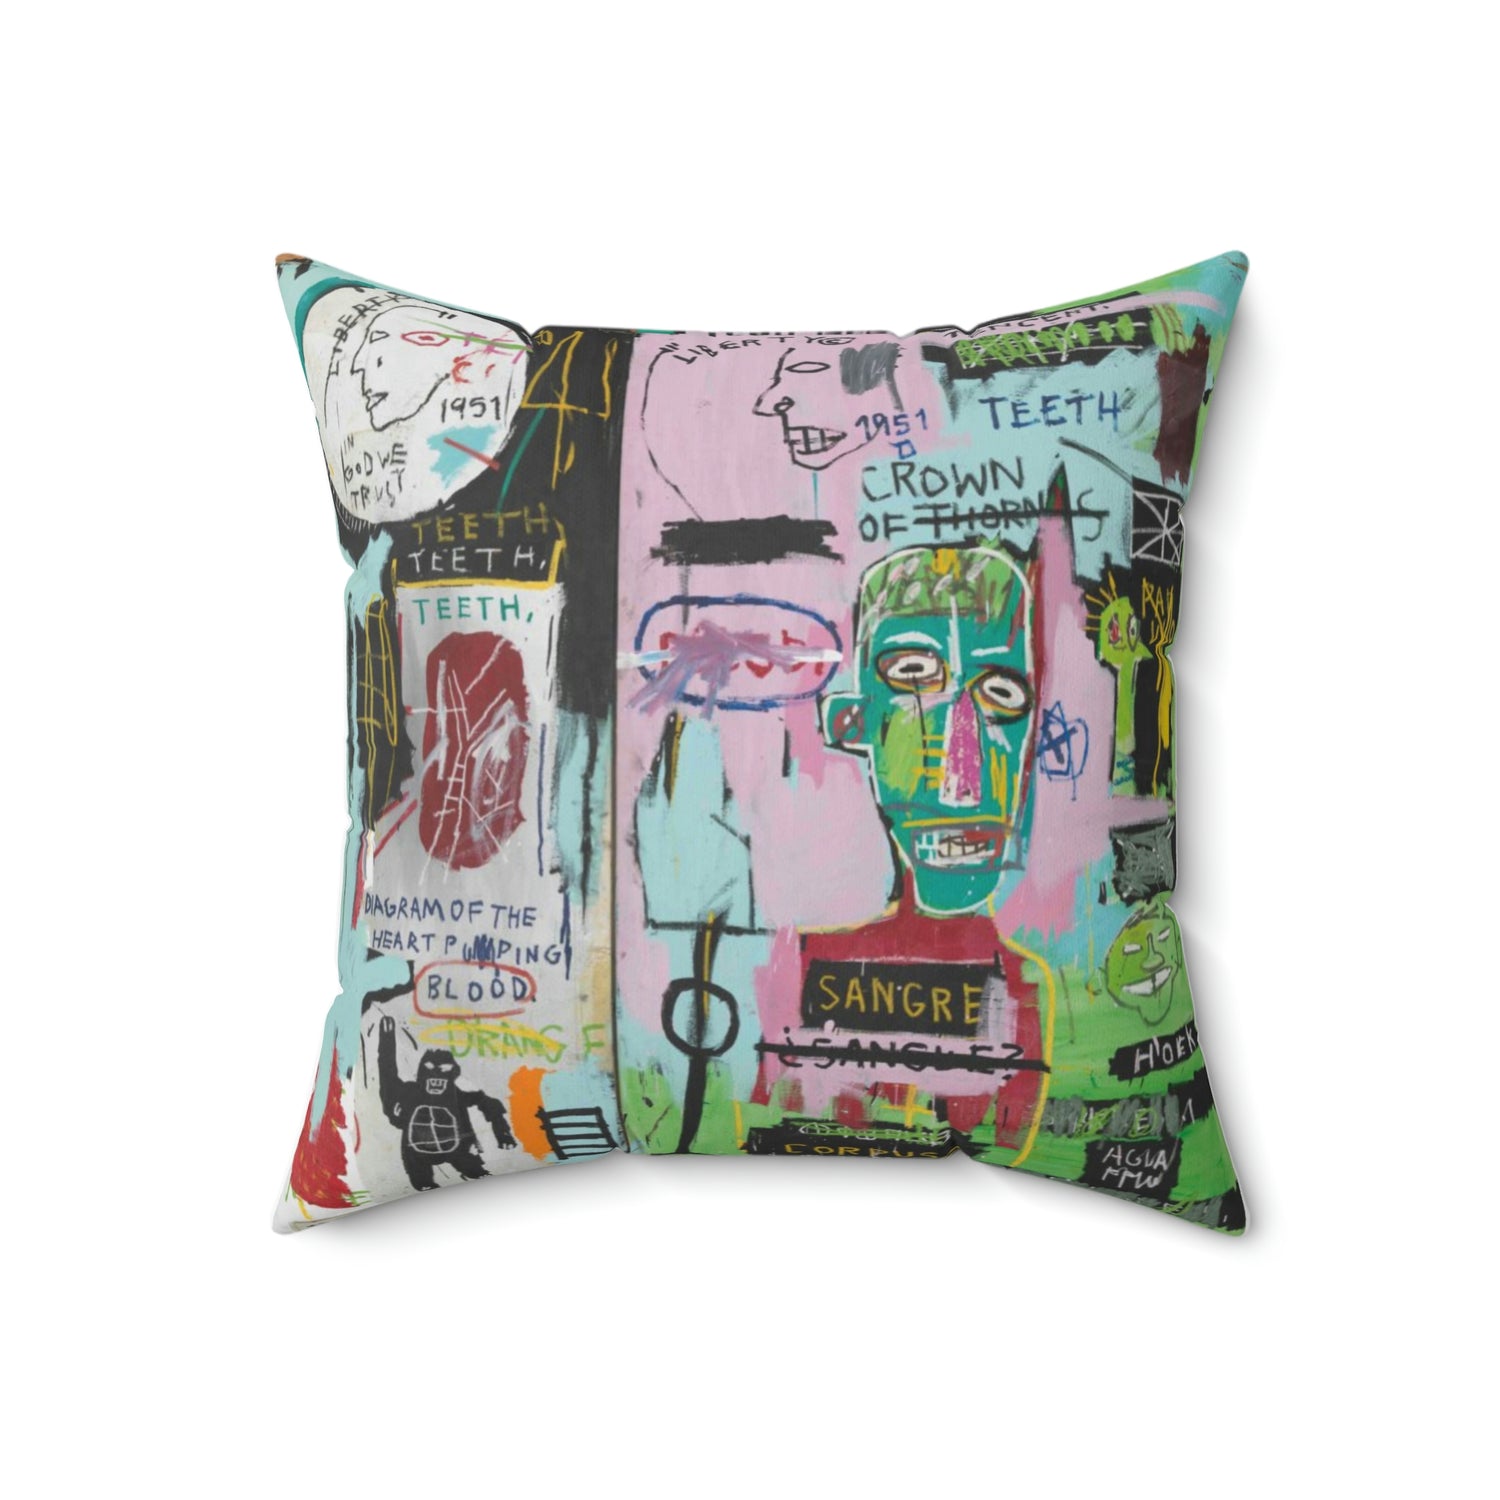 Jean-Michel Basquiat "In Italian" Artwork Square Throw Pillow